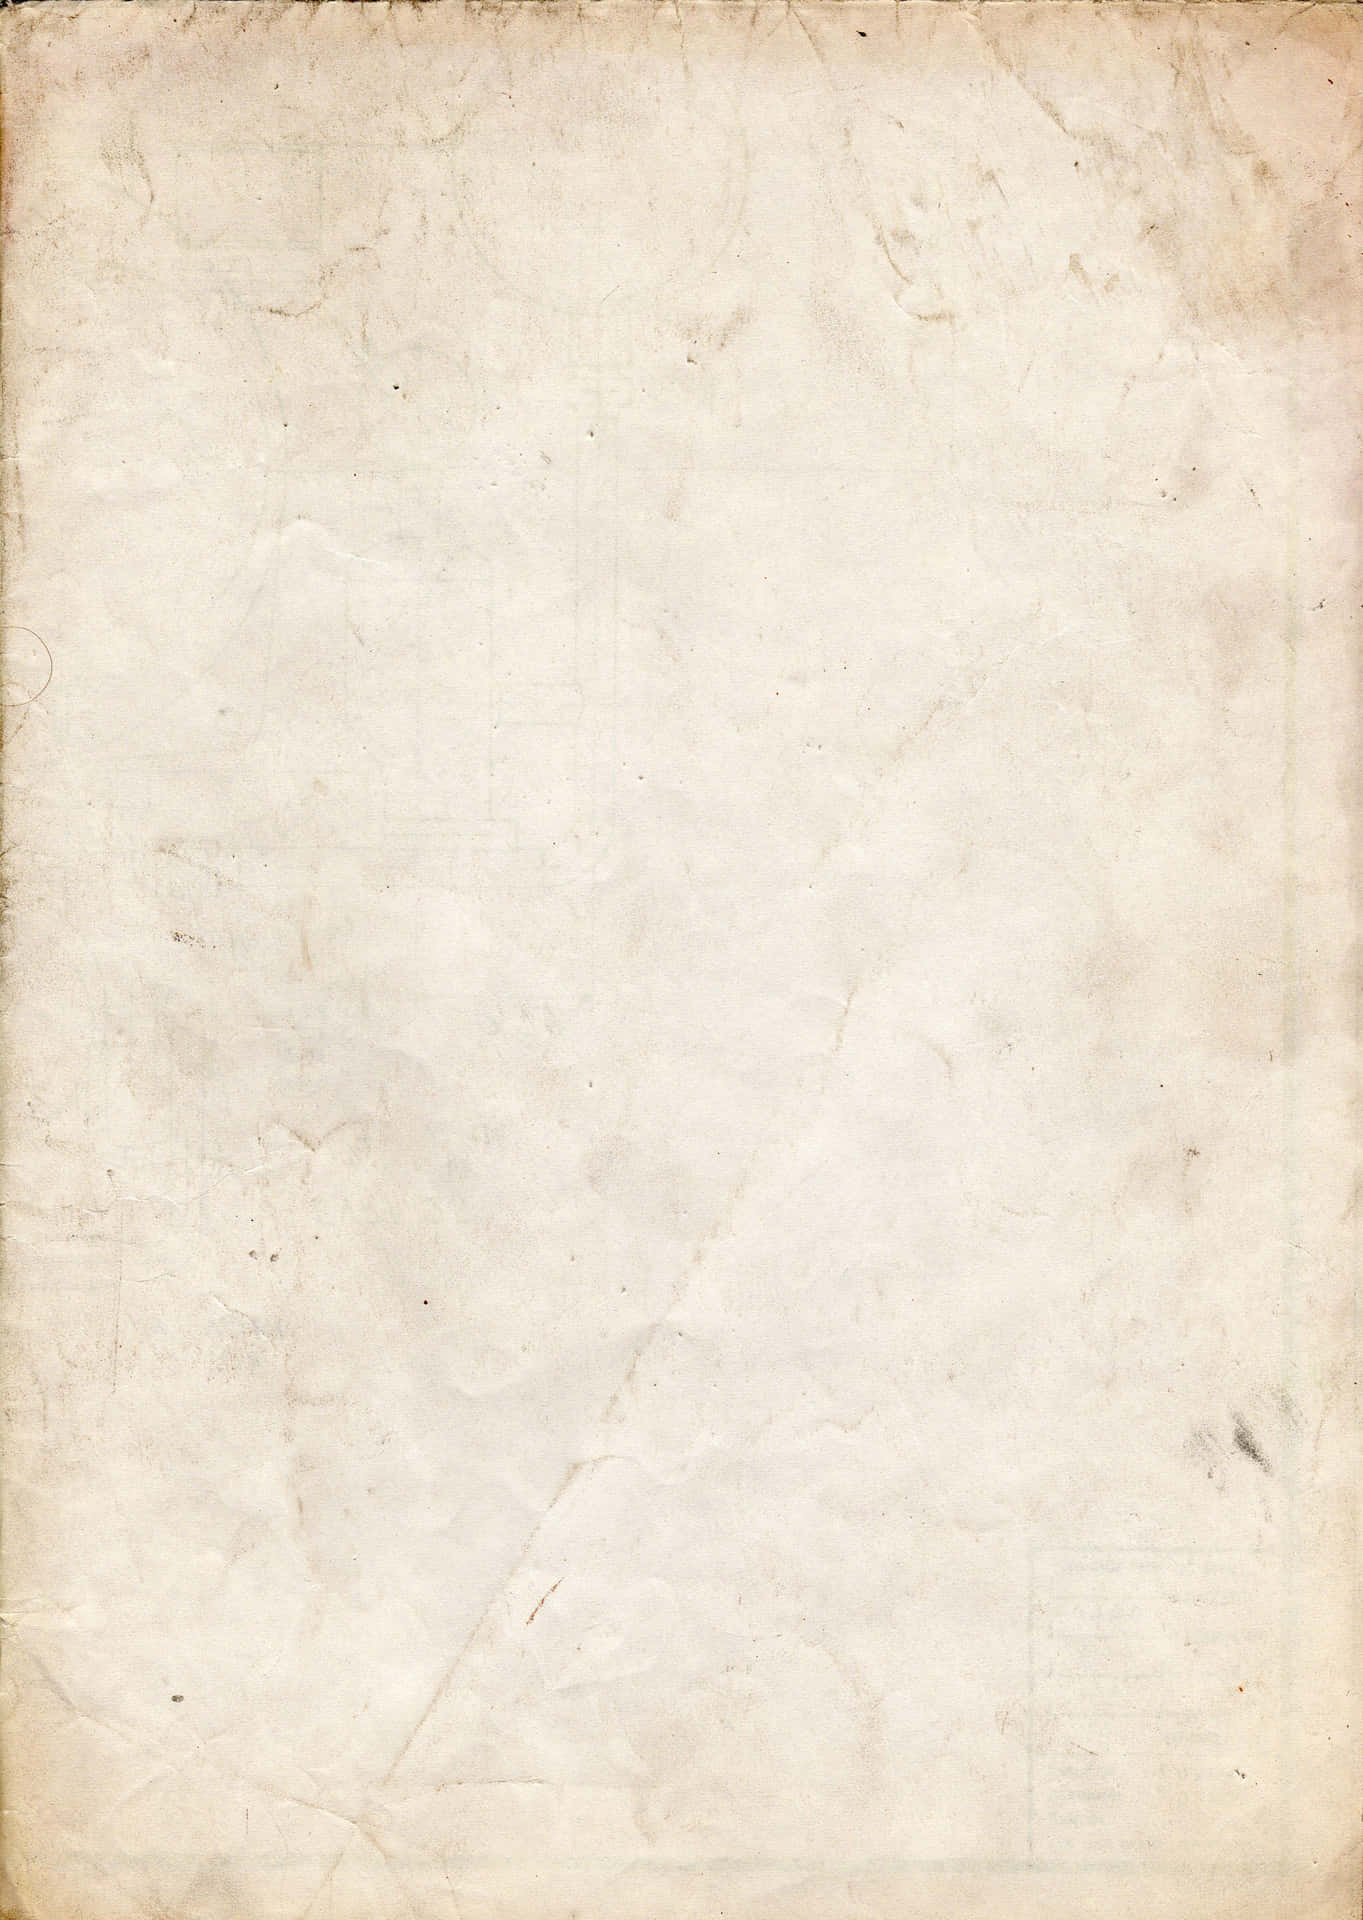 Caption: Vintage Layered Paper Texture Background